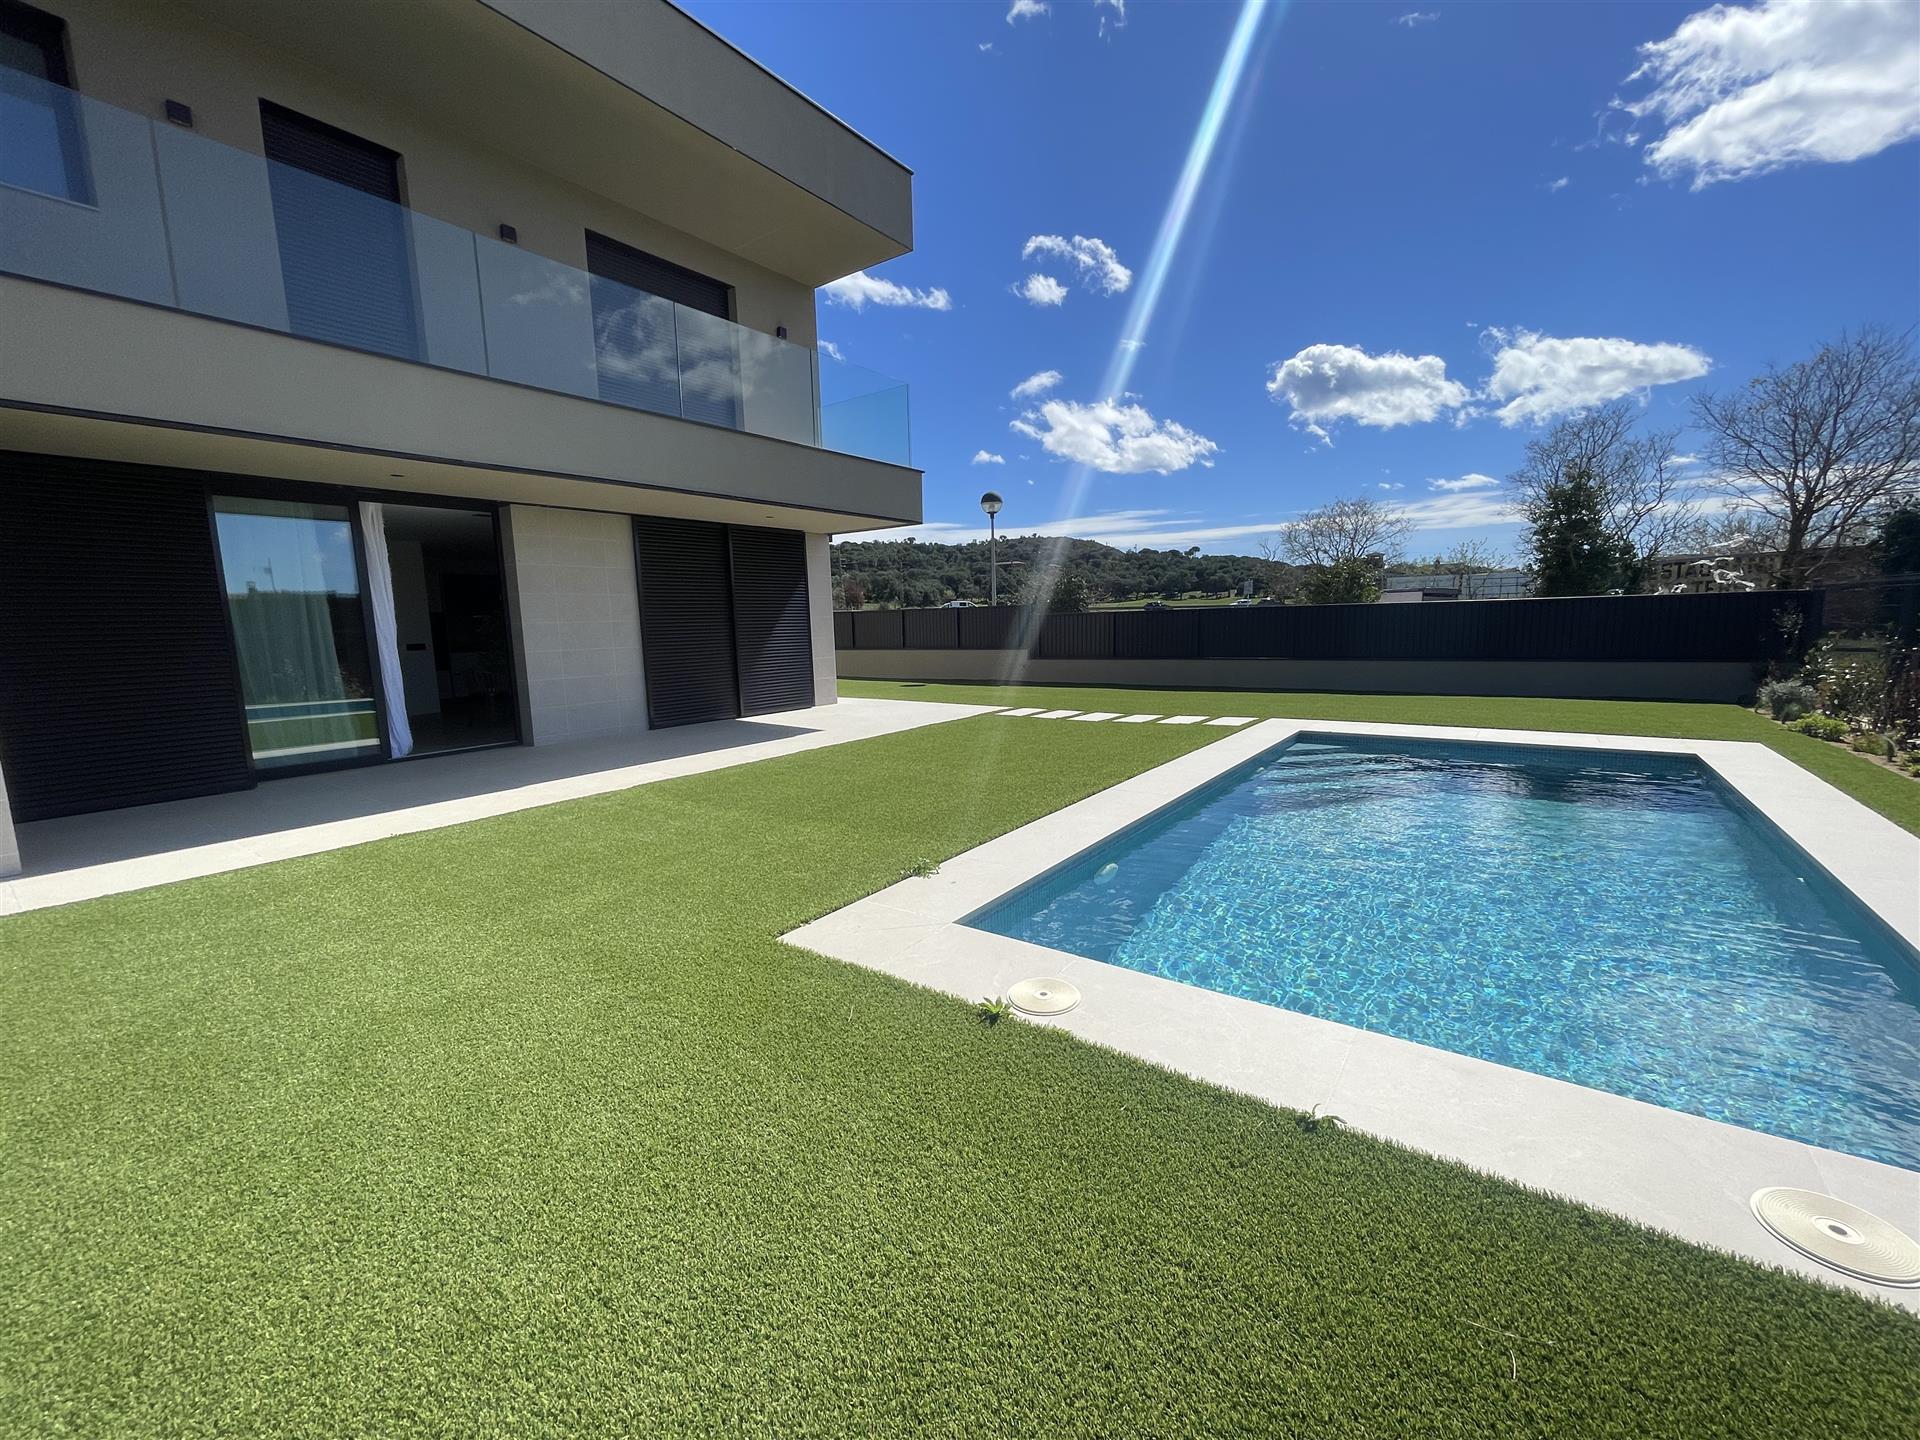 Pals, Exklusives modernes Haus mit privatem Pool